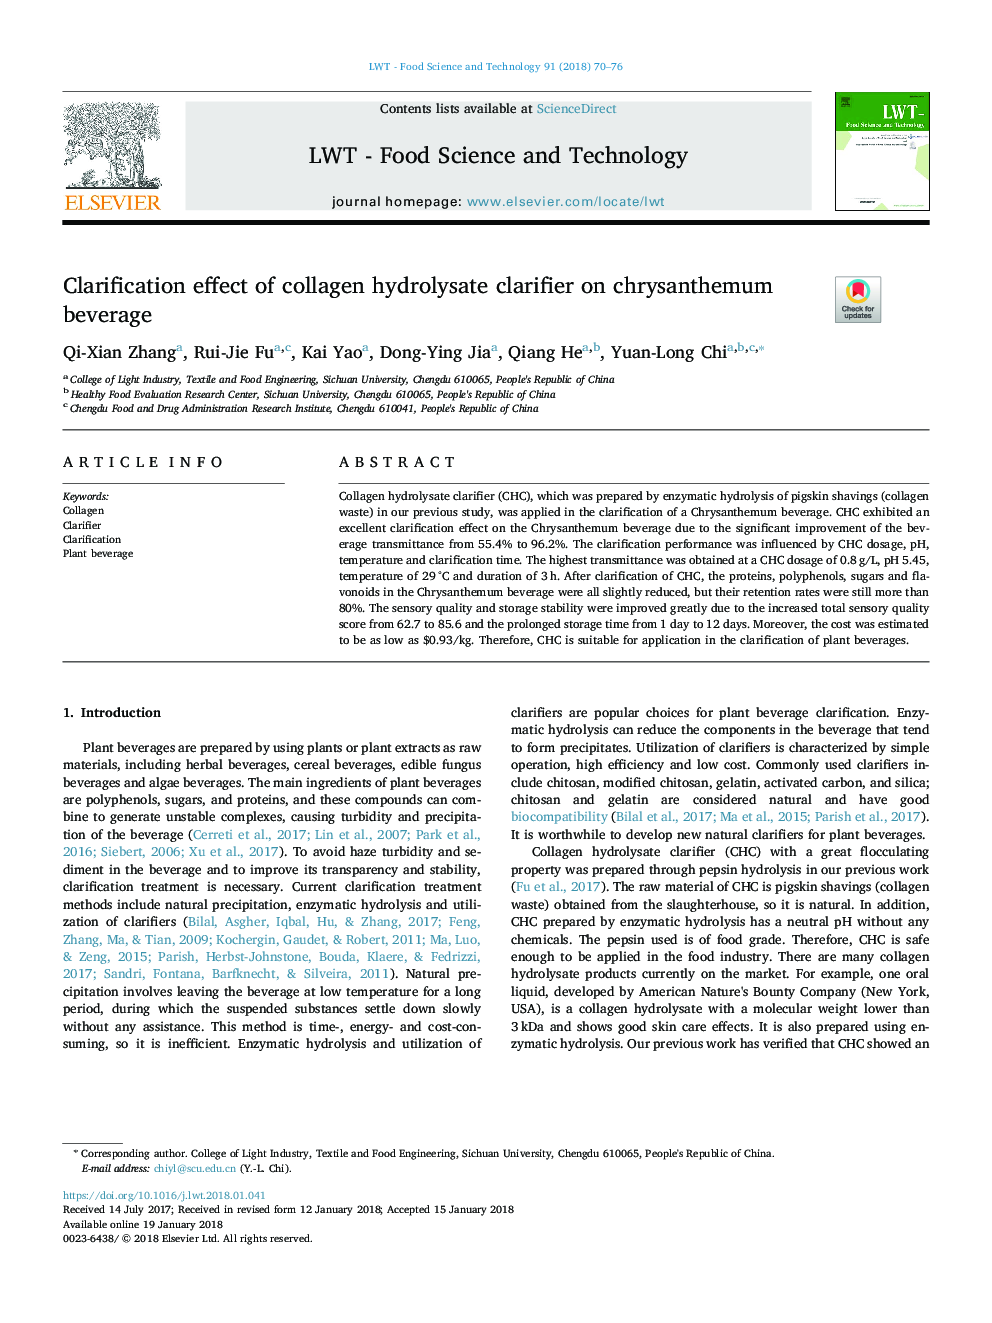 Clarification effect of collagen hydrolysate clarifier on chrysanthemum beverage